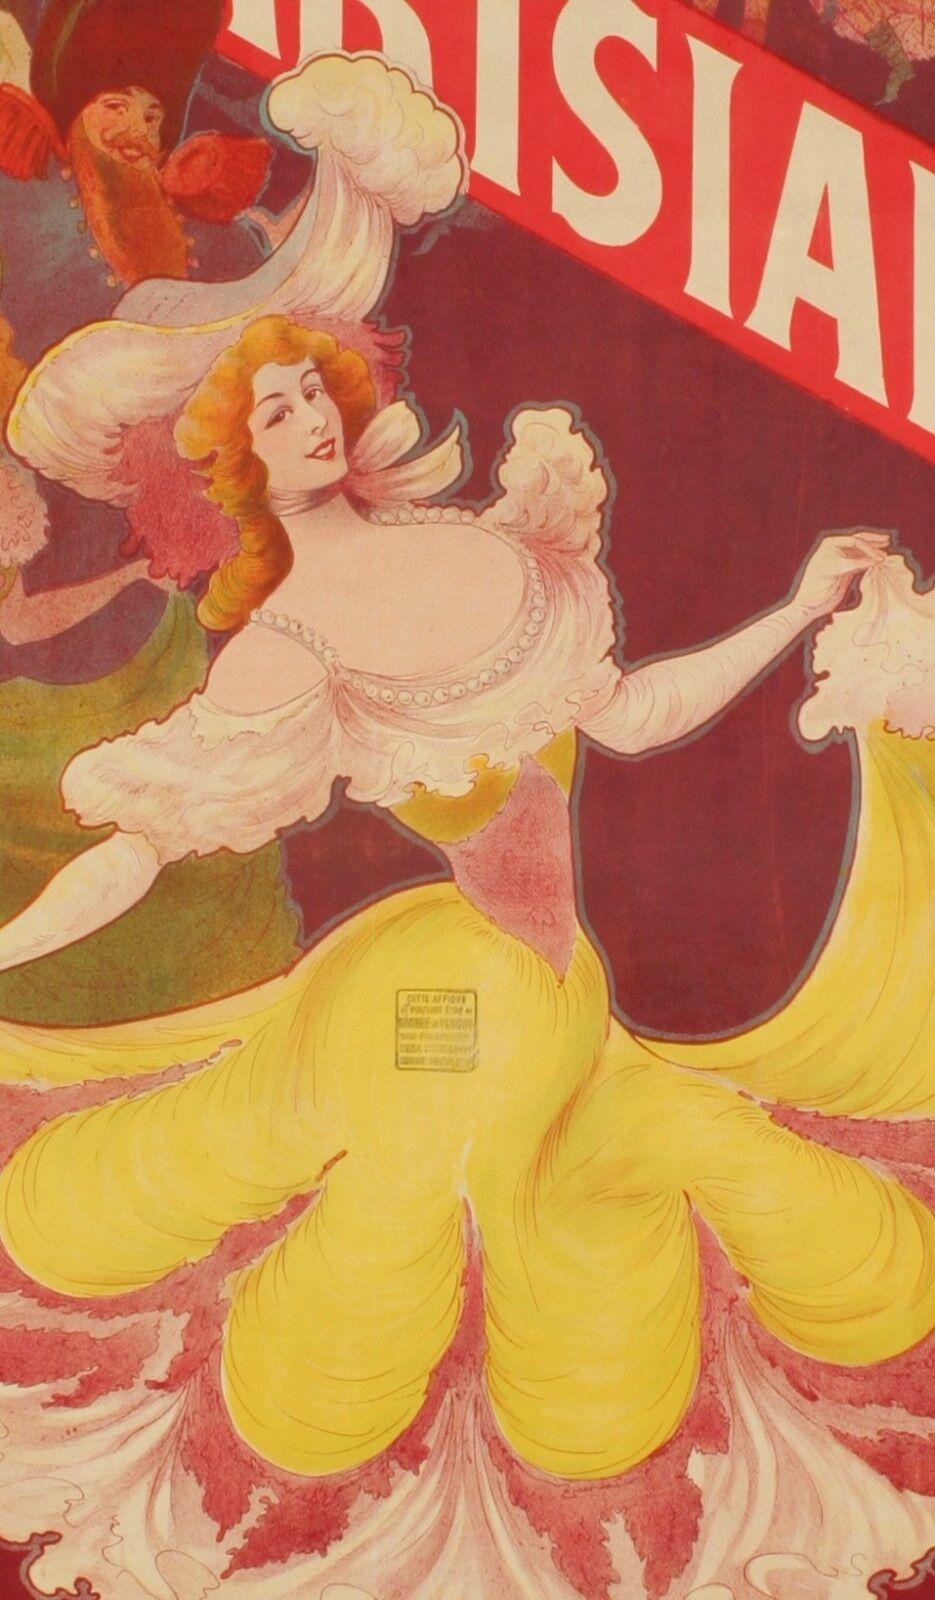 20th Century Original Vintage Poster-G. Biliotti-Parisiana-Opera-Dance, 1903 For Sale